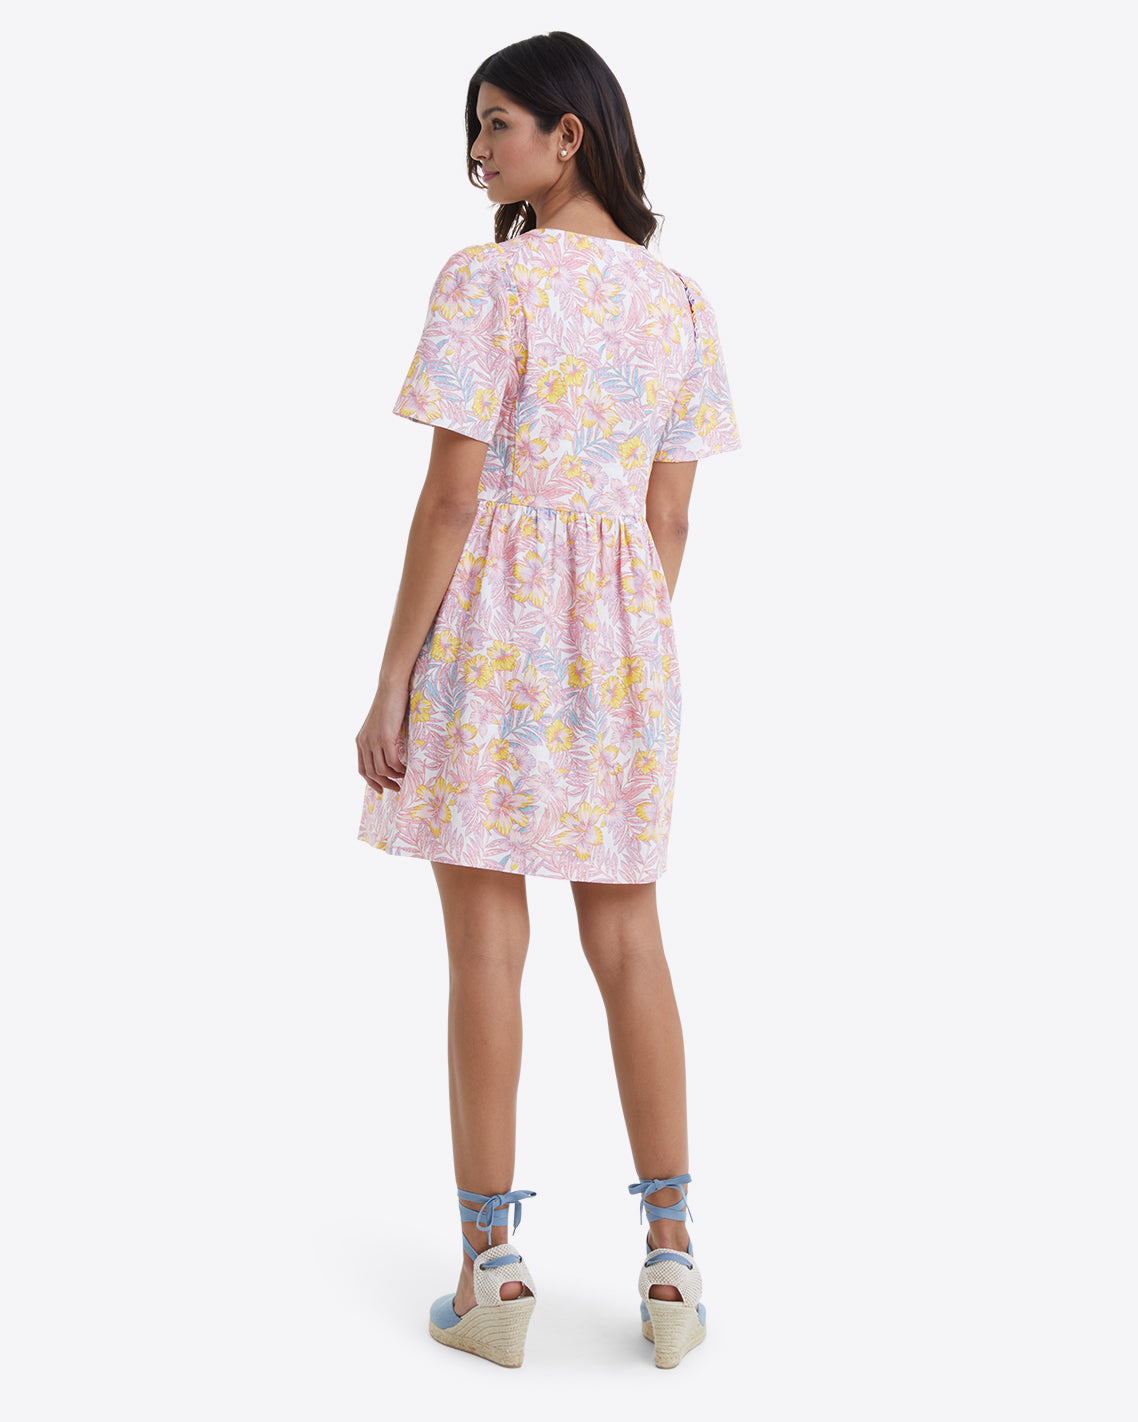 Danielle Mini Dress in Lily Floral